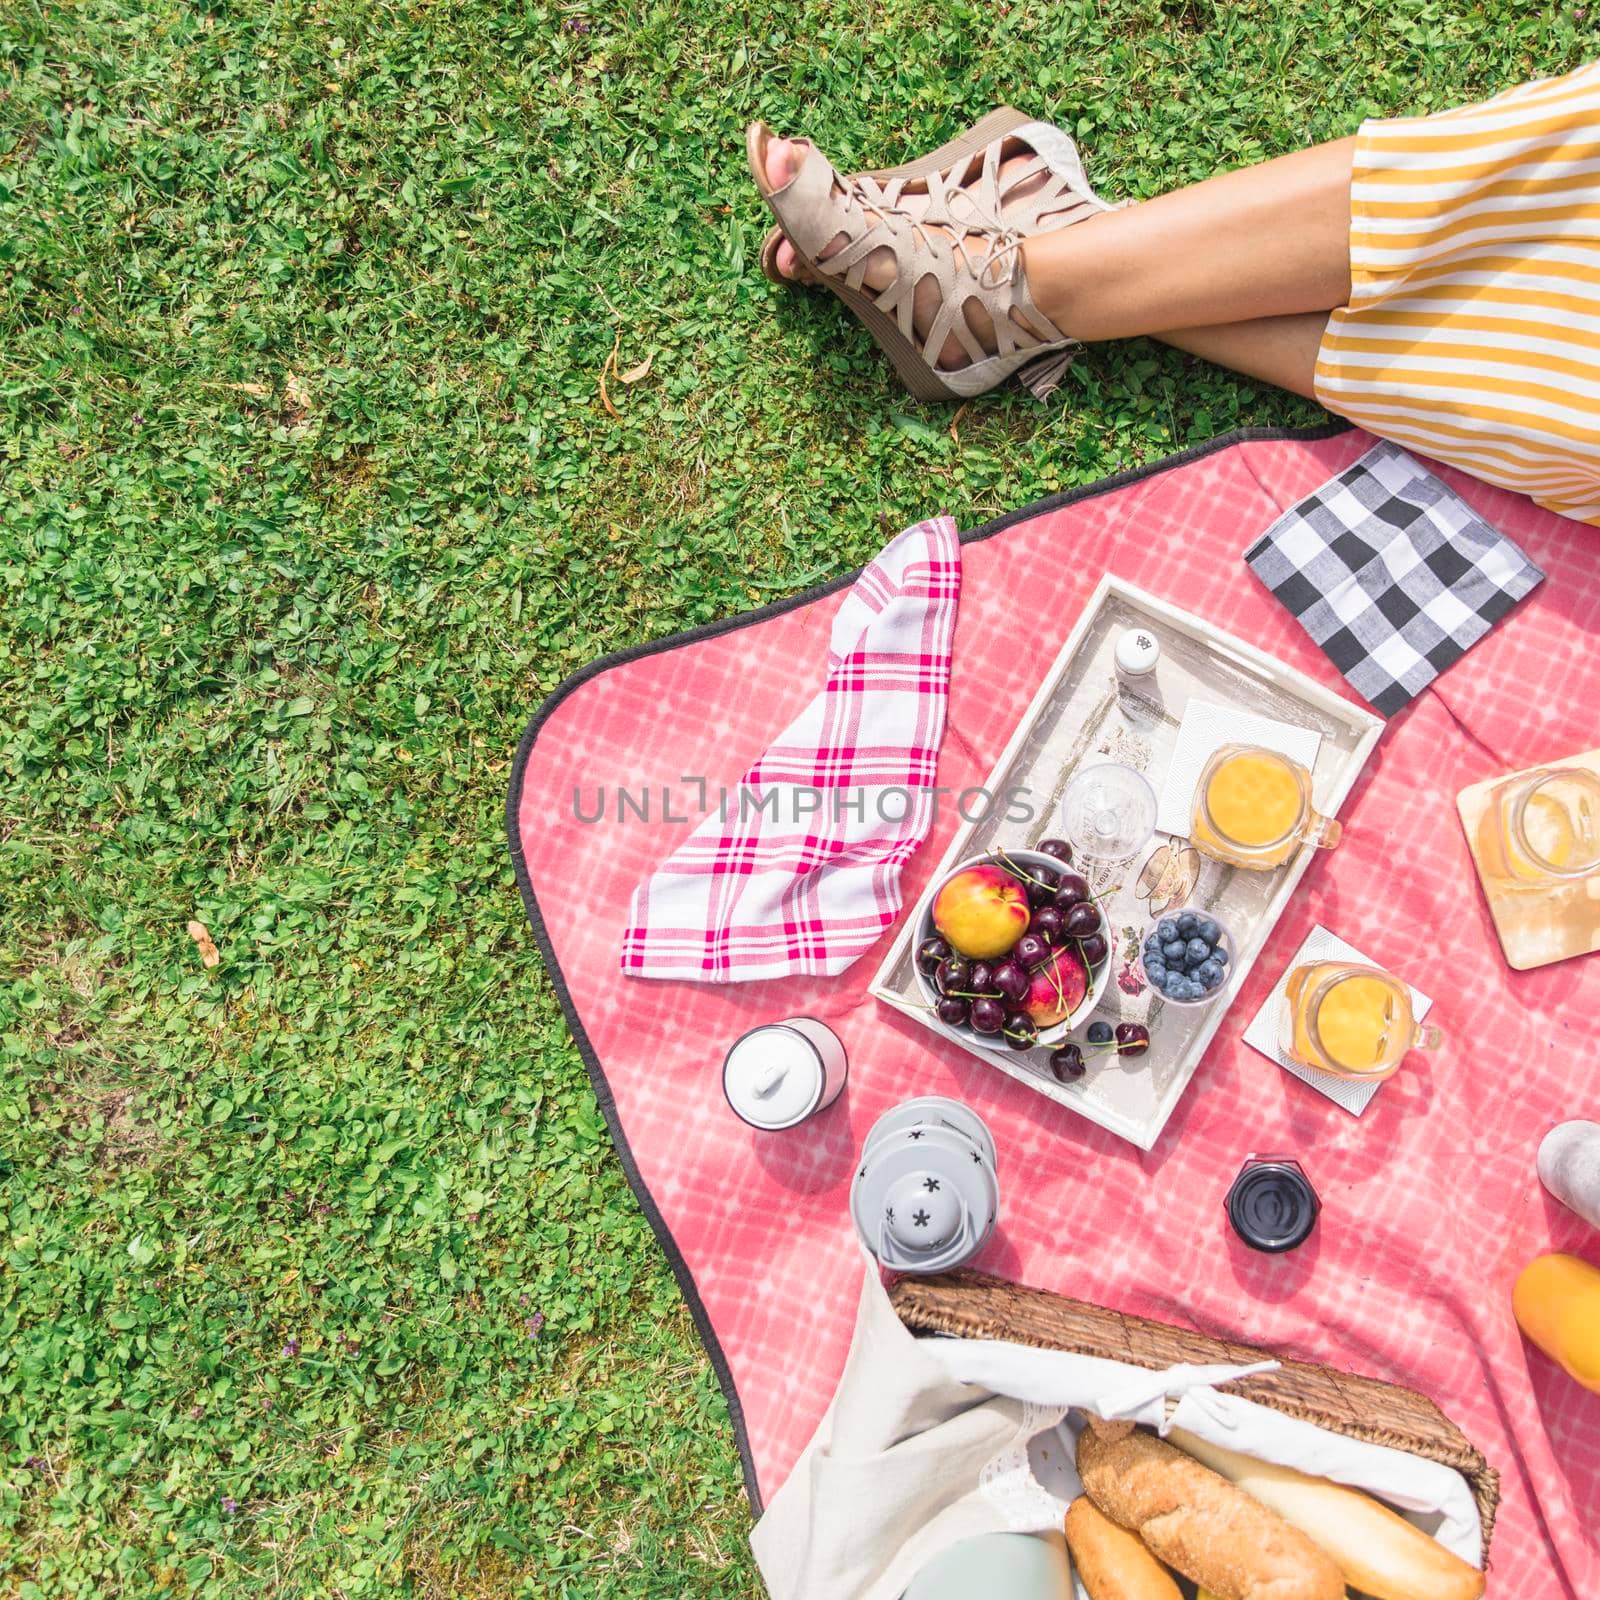 overhead view woman s leg breakfast picnic green grass. High quality photo by Zahard